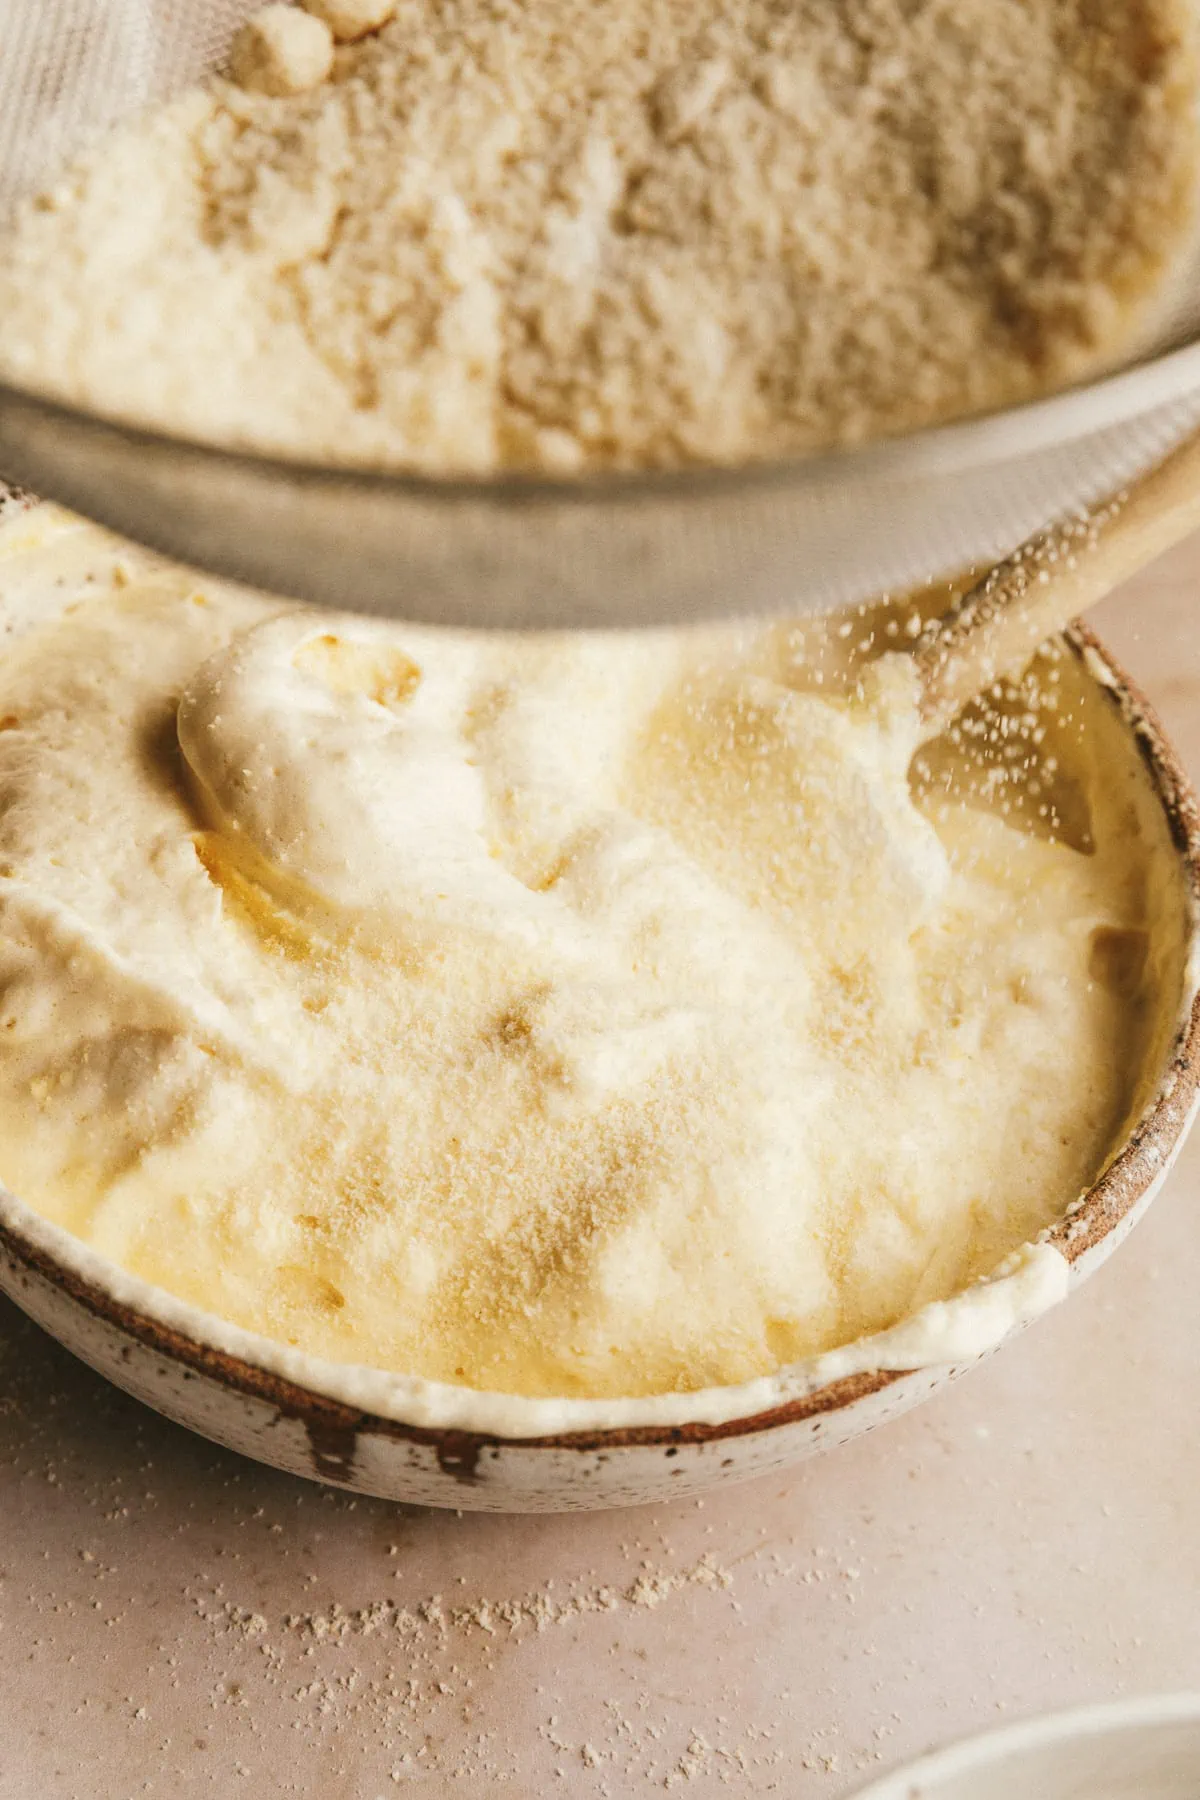 Sifting almond flour mixture over bowl of egg whites to make sugar free ladyfingers.